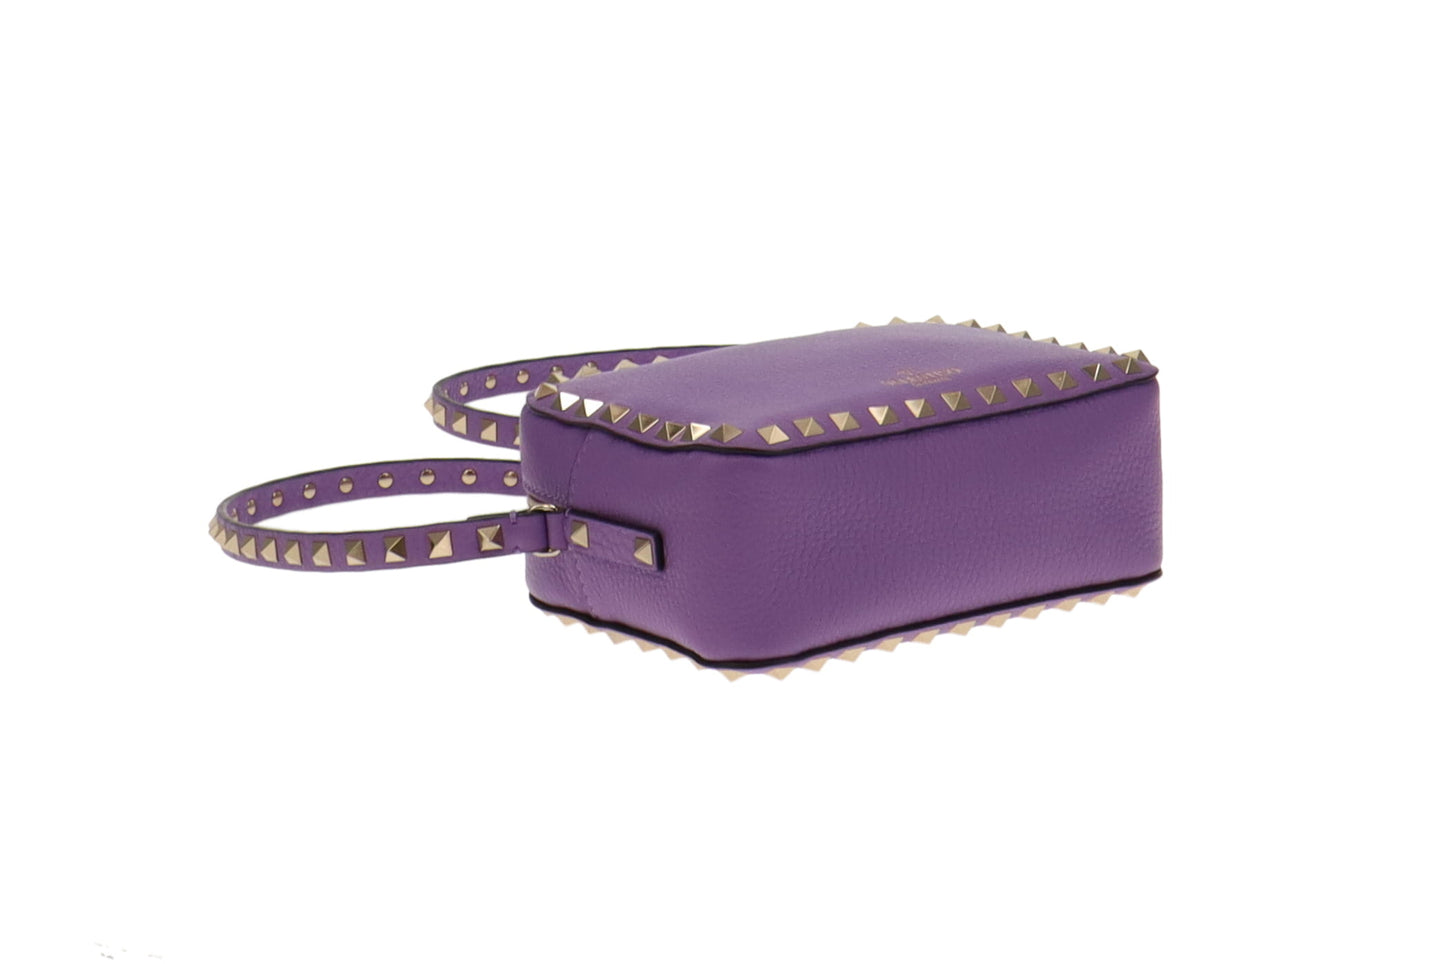 Valentino Rockstud Camera Bag Purple